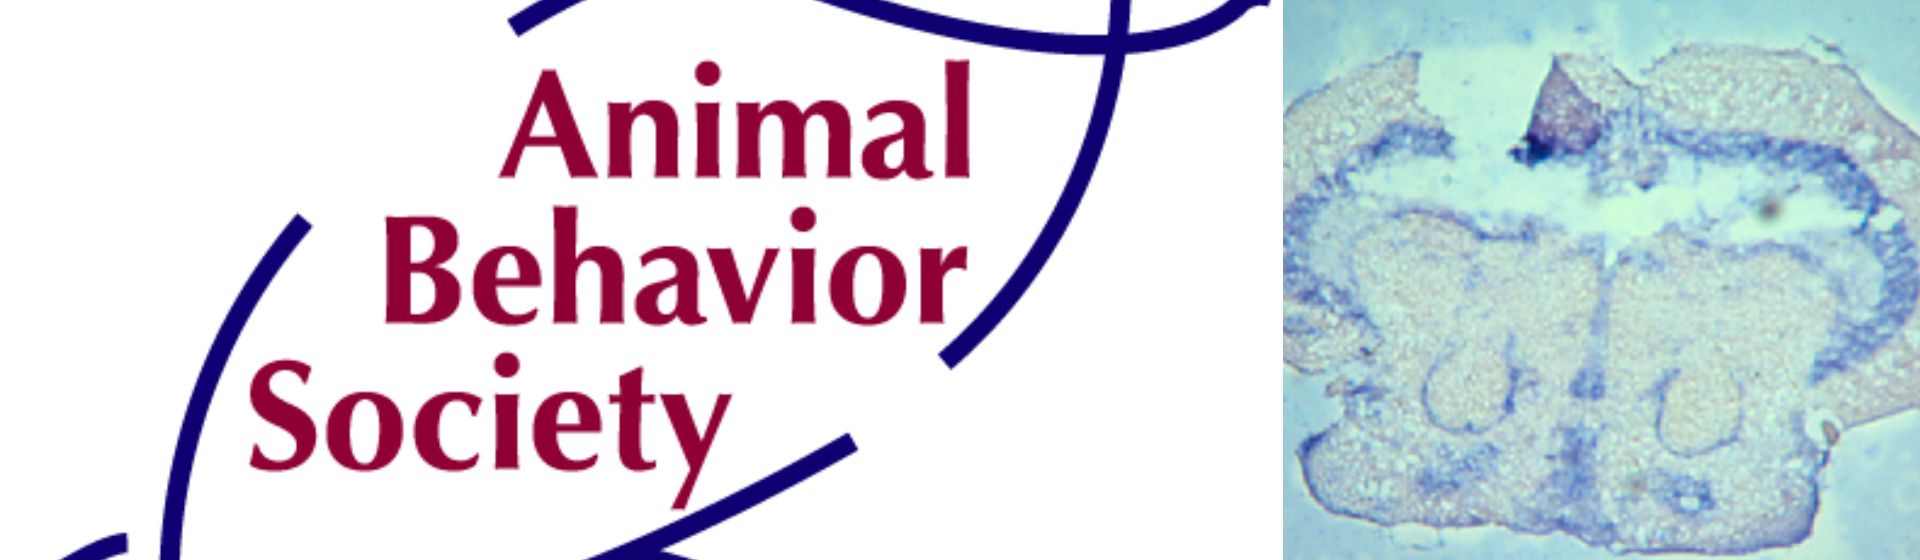 premio animal behavior society